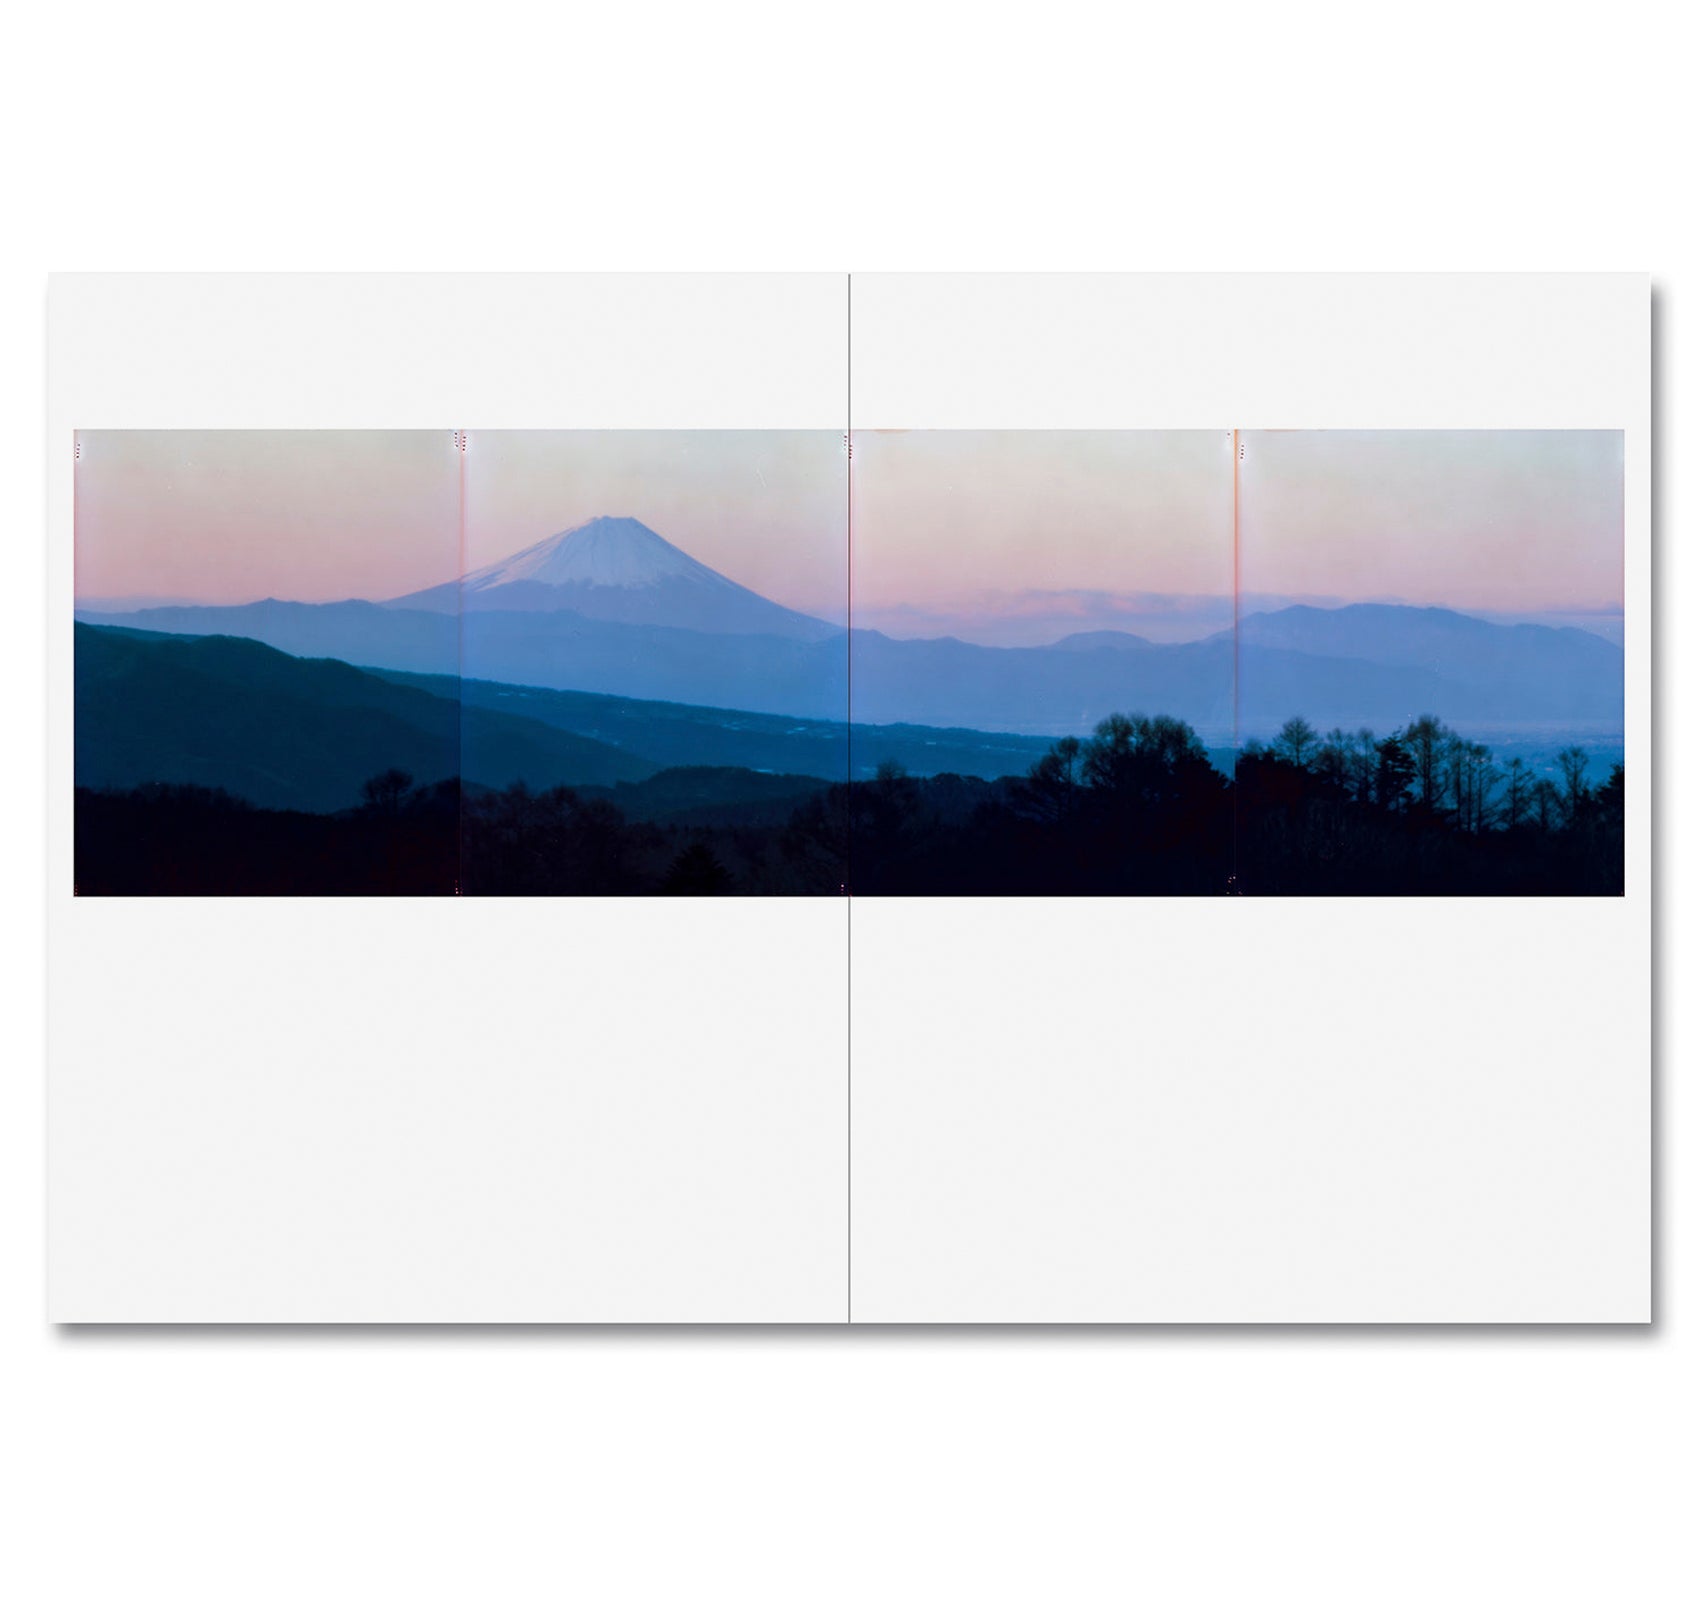 THIRTY-SIX VIEWS OF MOUNT FUJI by Takashi Homma